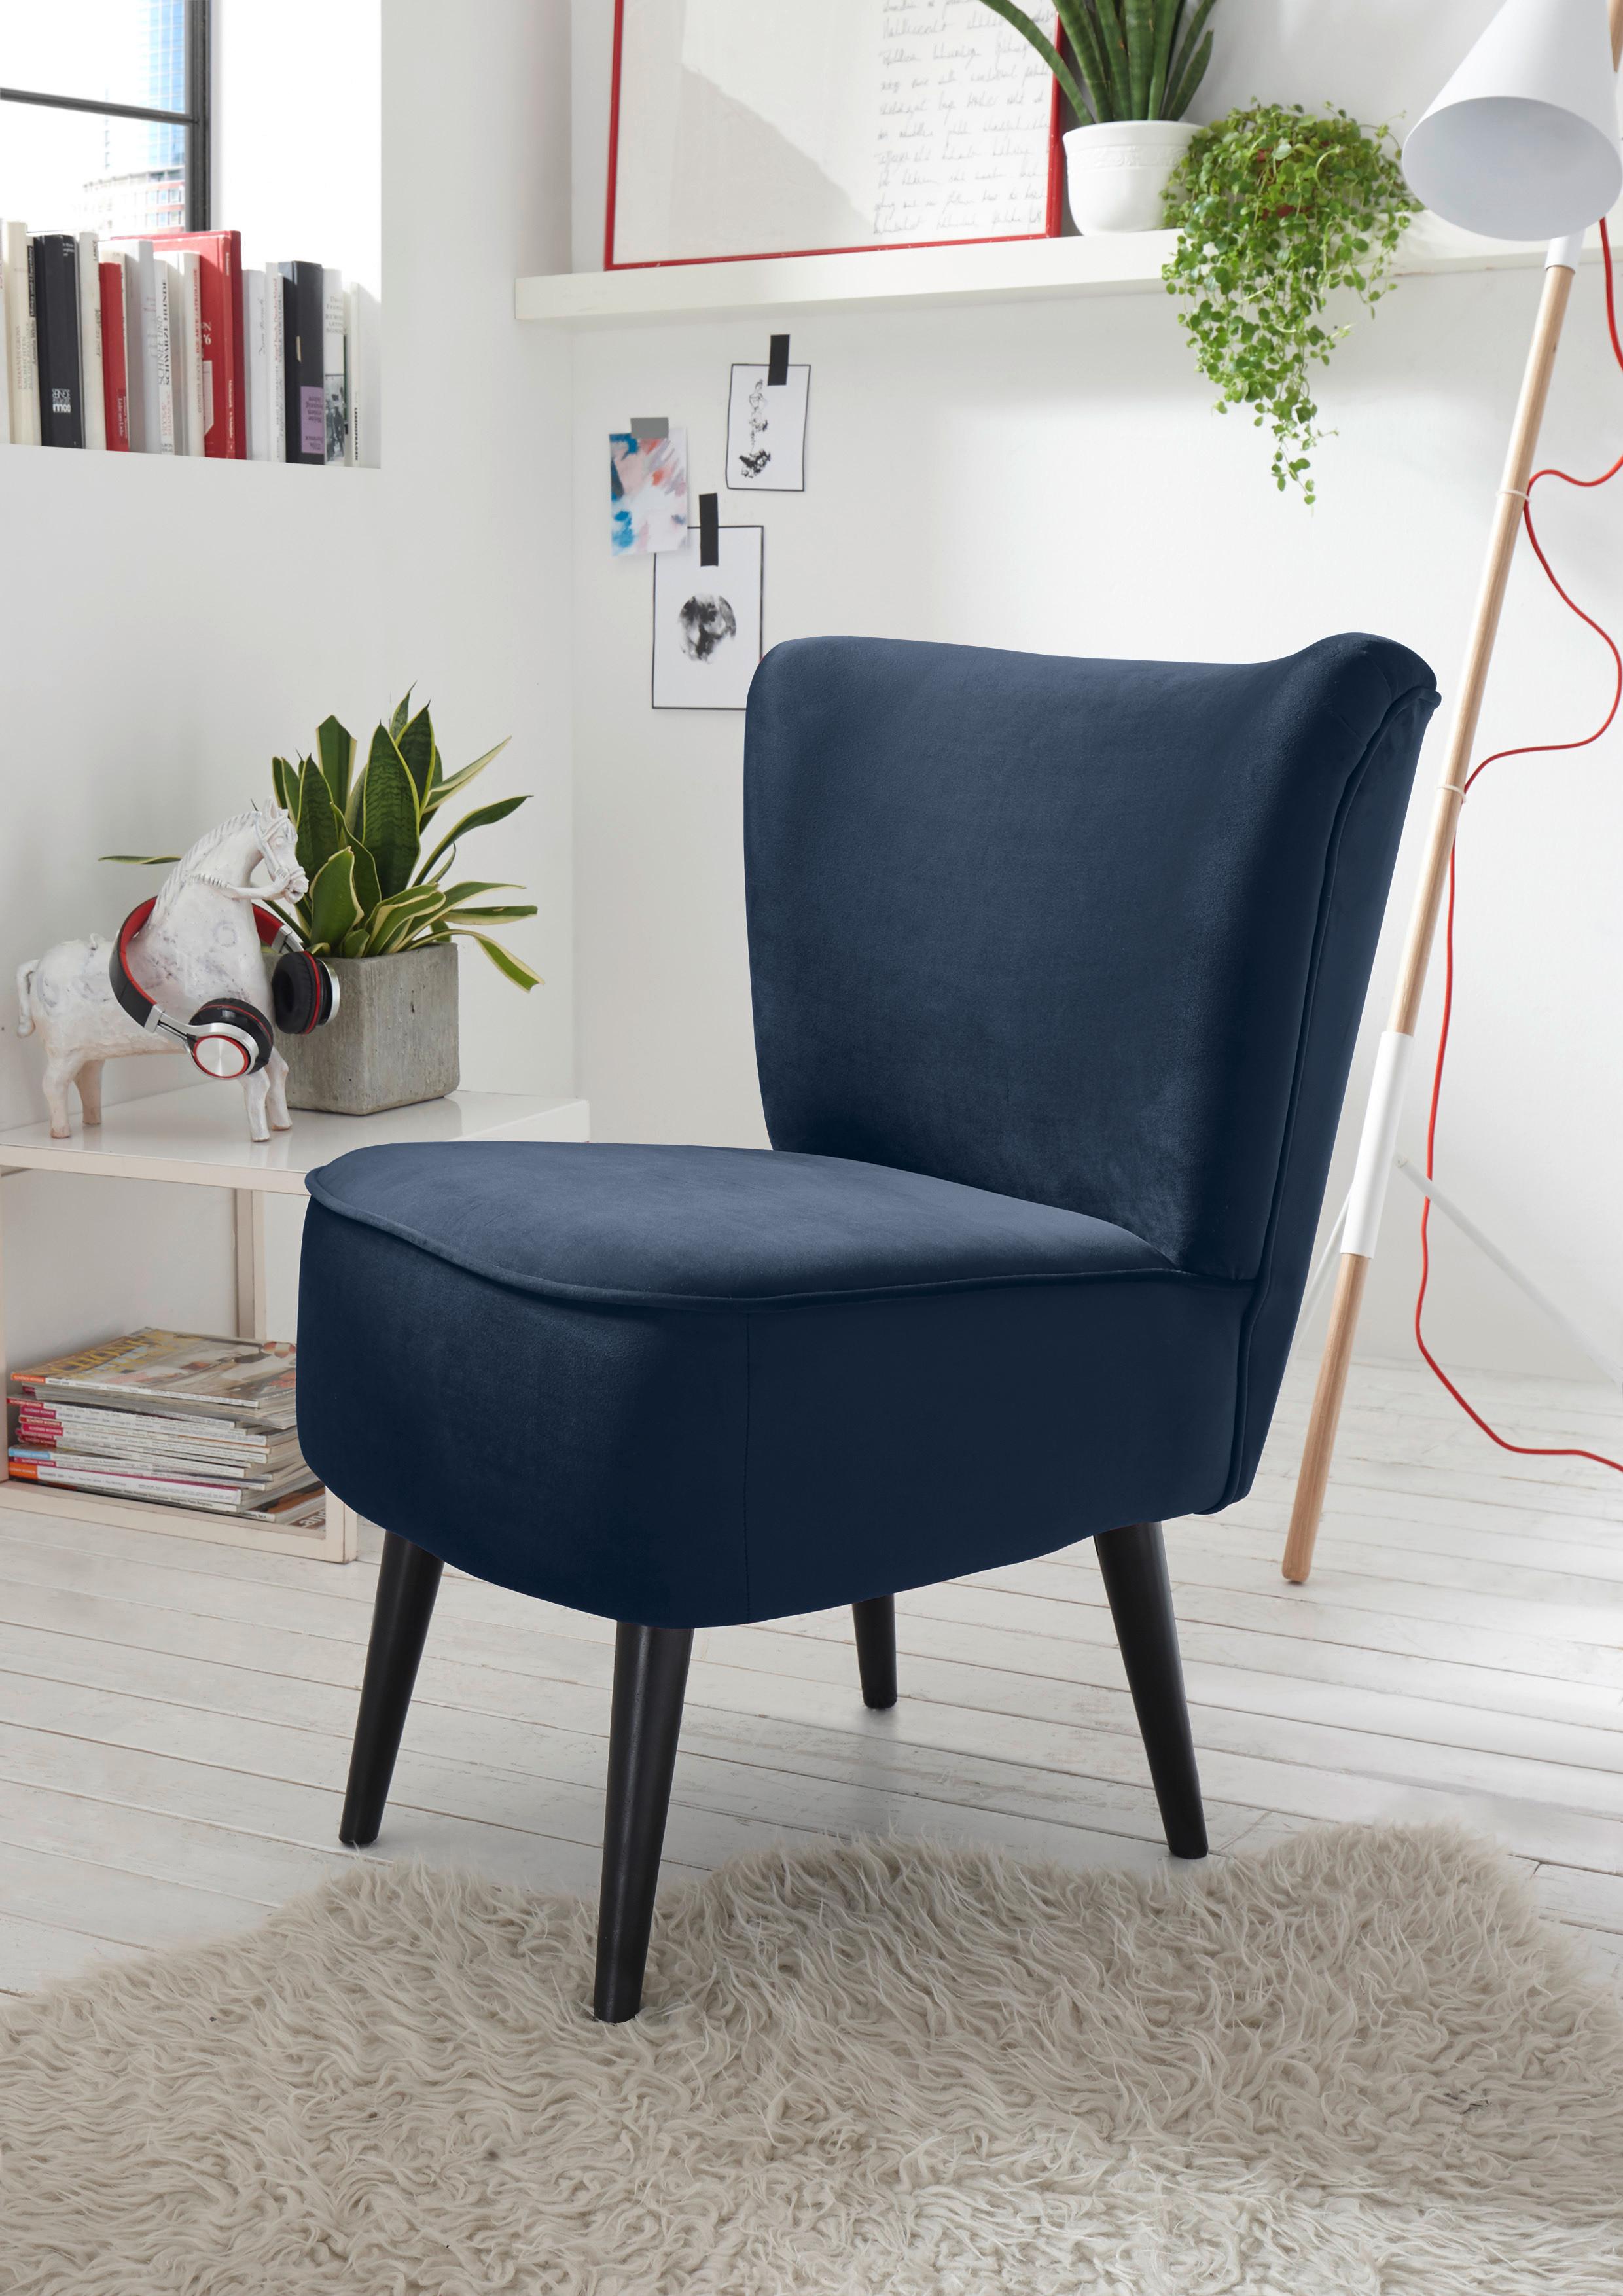 Fotelja Lord -Trend- - plava/crna, Trend, drvni materijal/tekstil (65/89/70cm) - MID.YOU